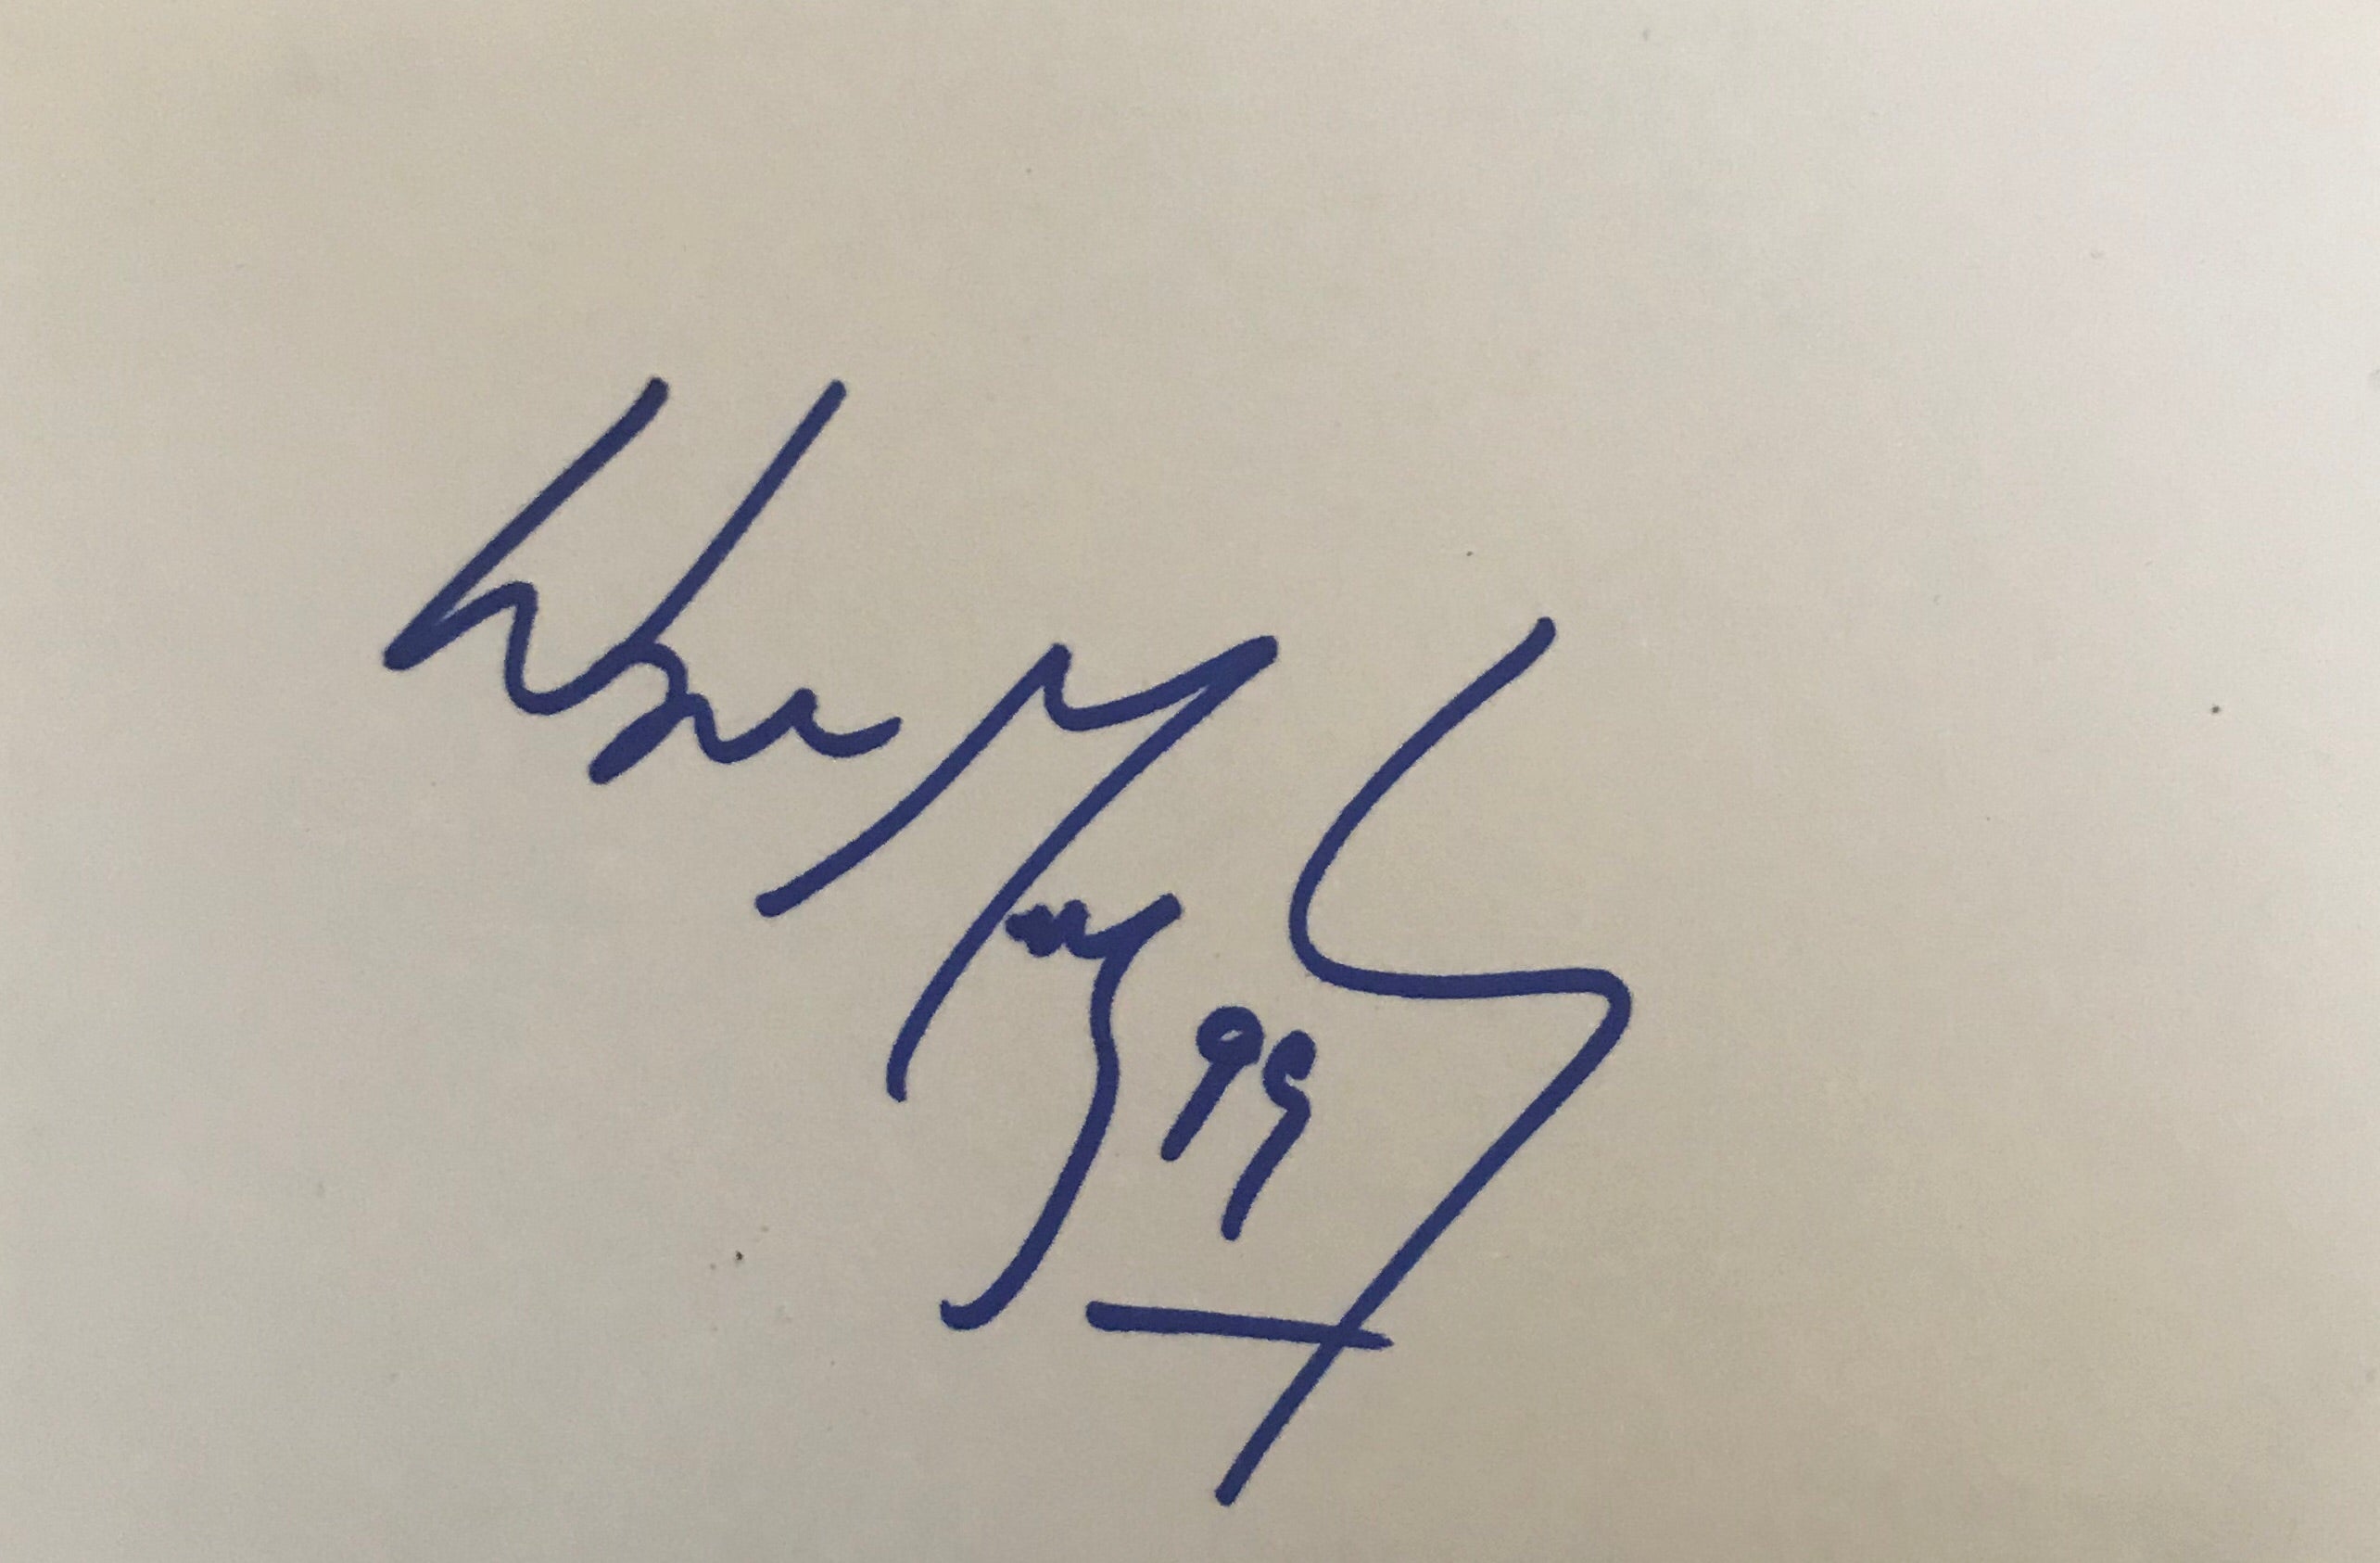 Wayne Gretzky - Ice Hockey - Legend - Coach - Autographed Card